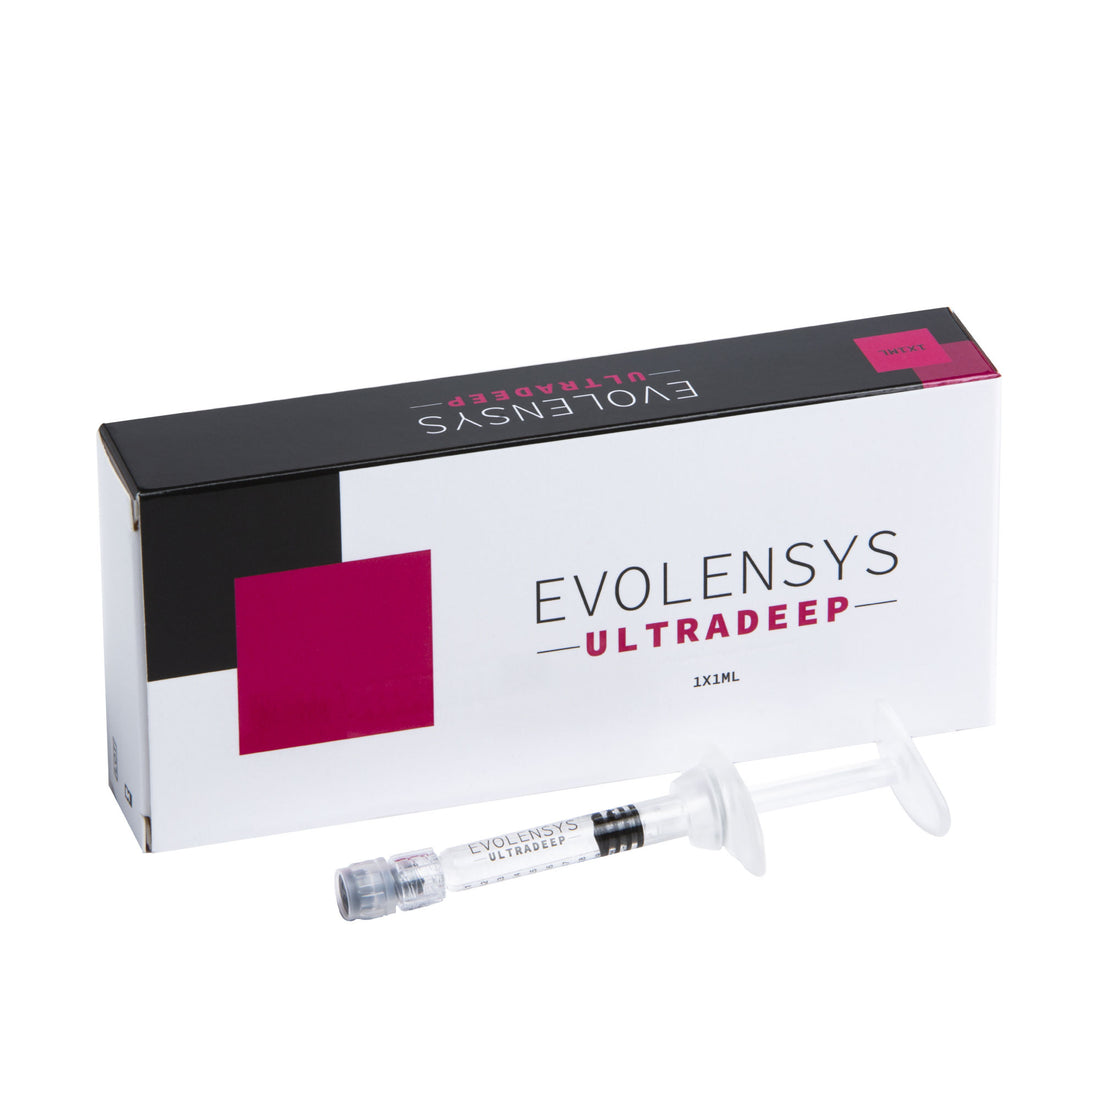 EVOLENSYS ULTRADEEP FILLER - Μονοφασικό Gel Συγκέντρωση Υαλουρονικού Οξέος 25mg/ml